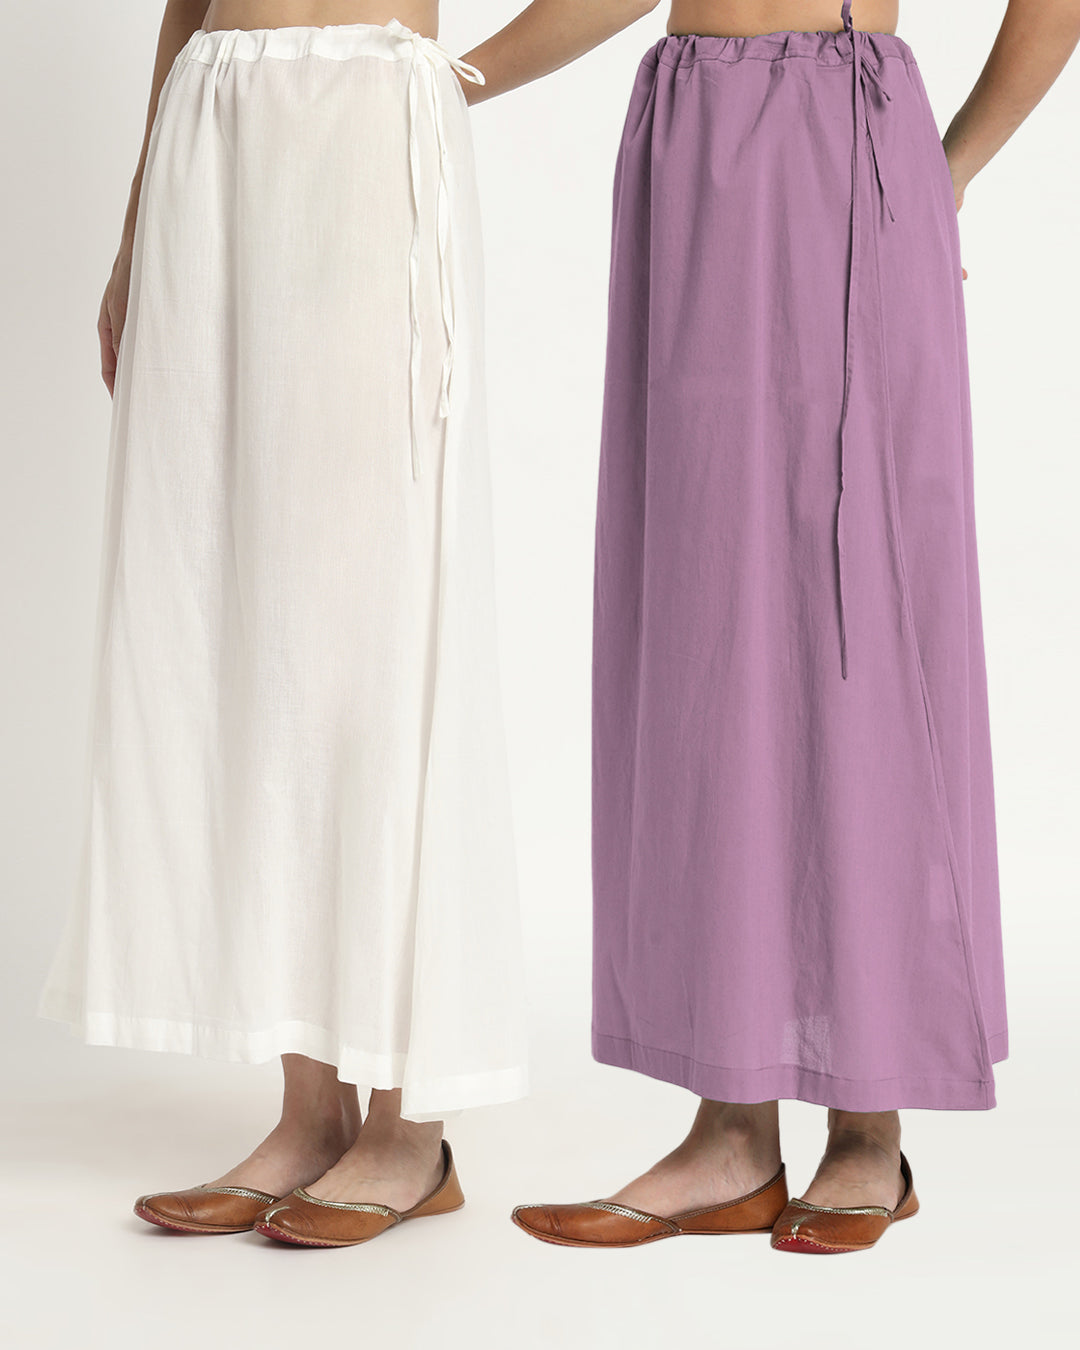 Combo: Pristine White & Iris Pink Peekaboo Petticoat- Set of 2